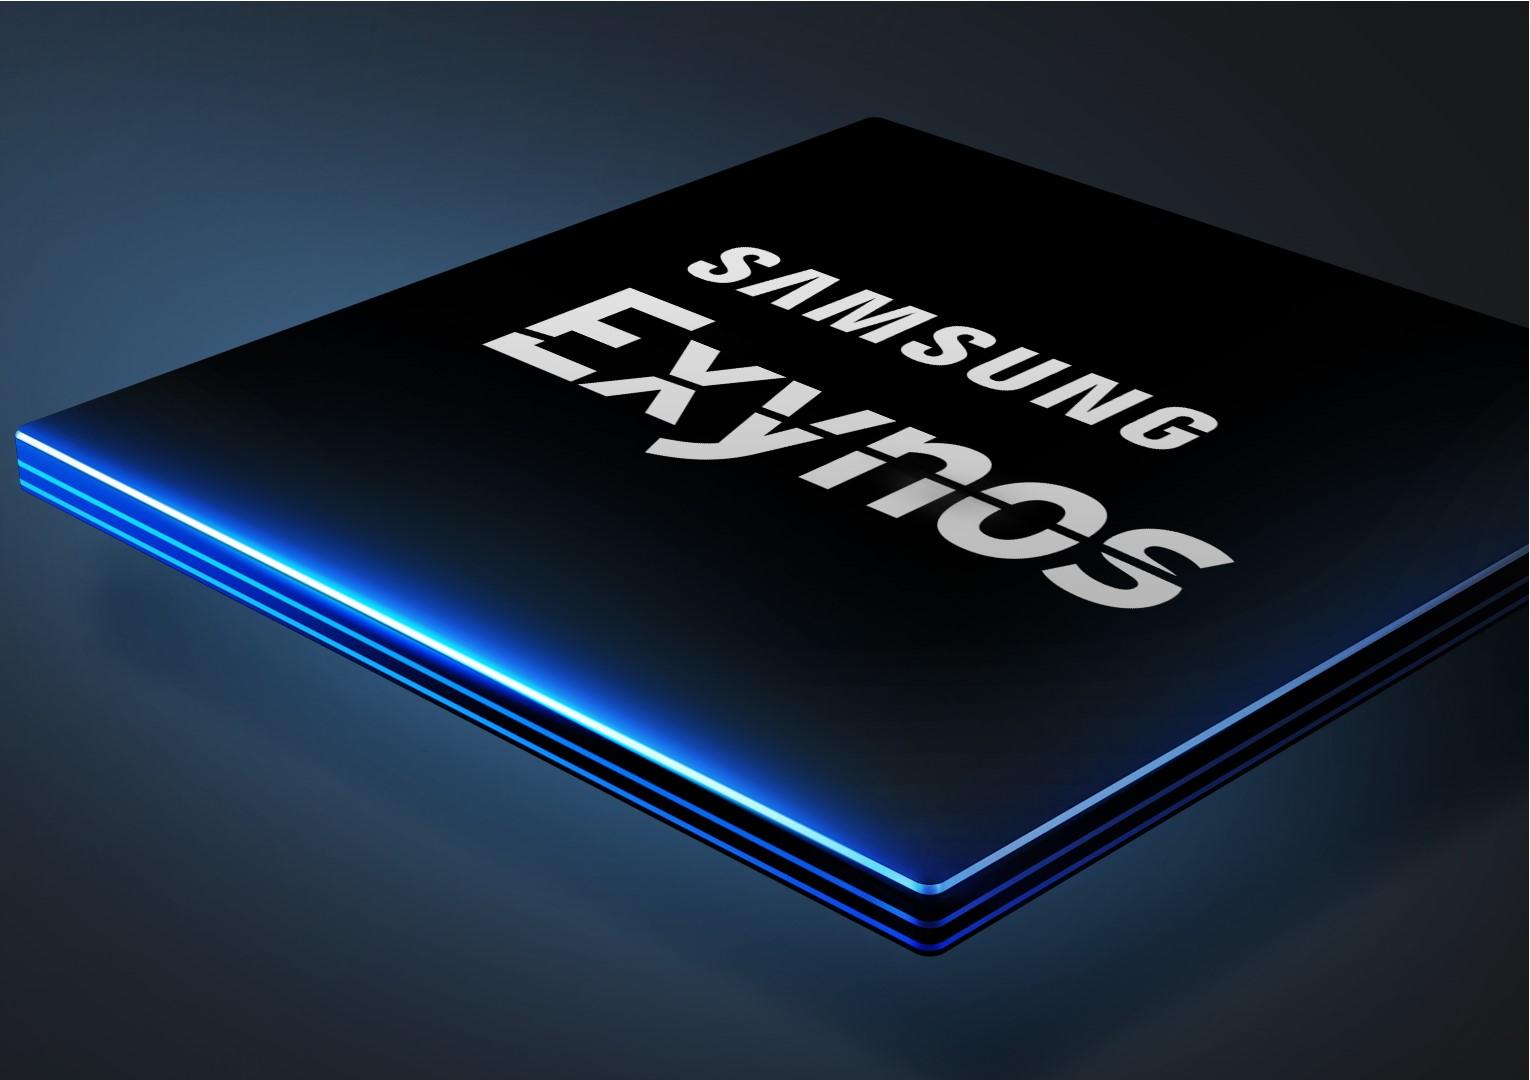 More information about "H Samsung προϊδεάζει για τον νέο Exynos 9825, ανταγωνιστή του Snapdragon 855"